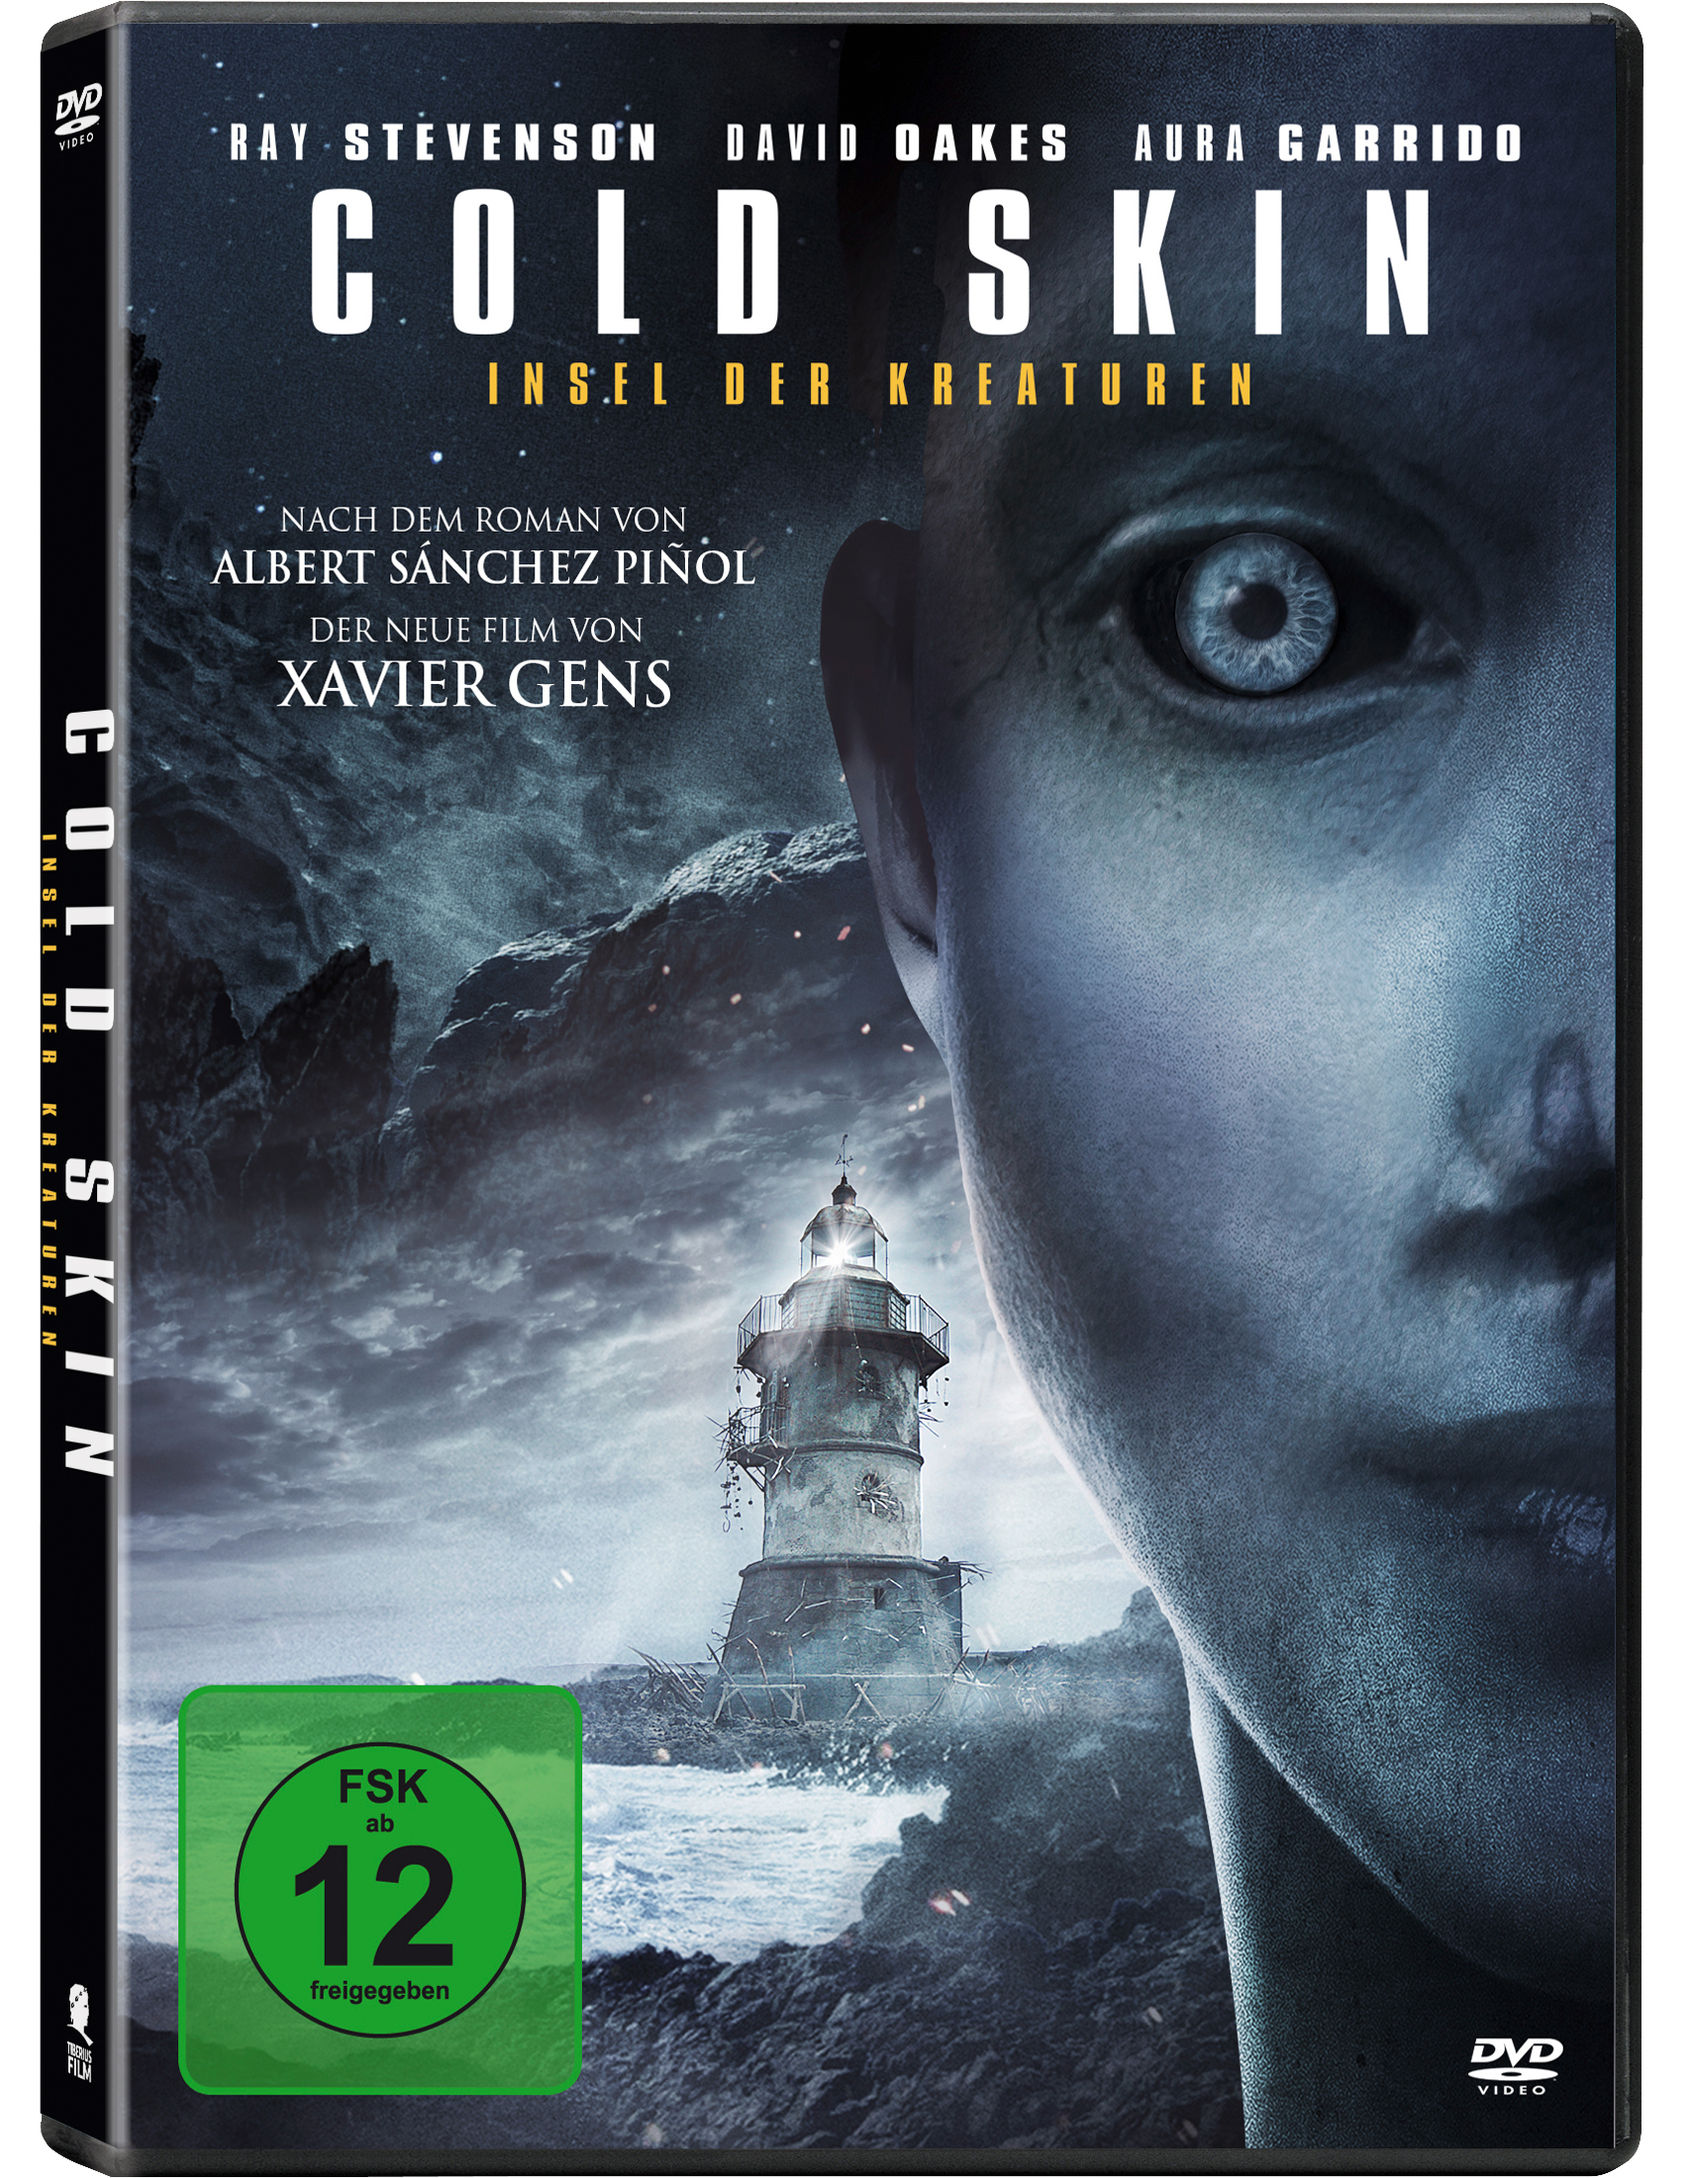 Cold Skin - Insel der Kreaturen DVD bei Weltbild.ch bestellen